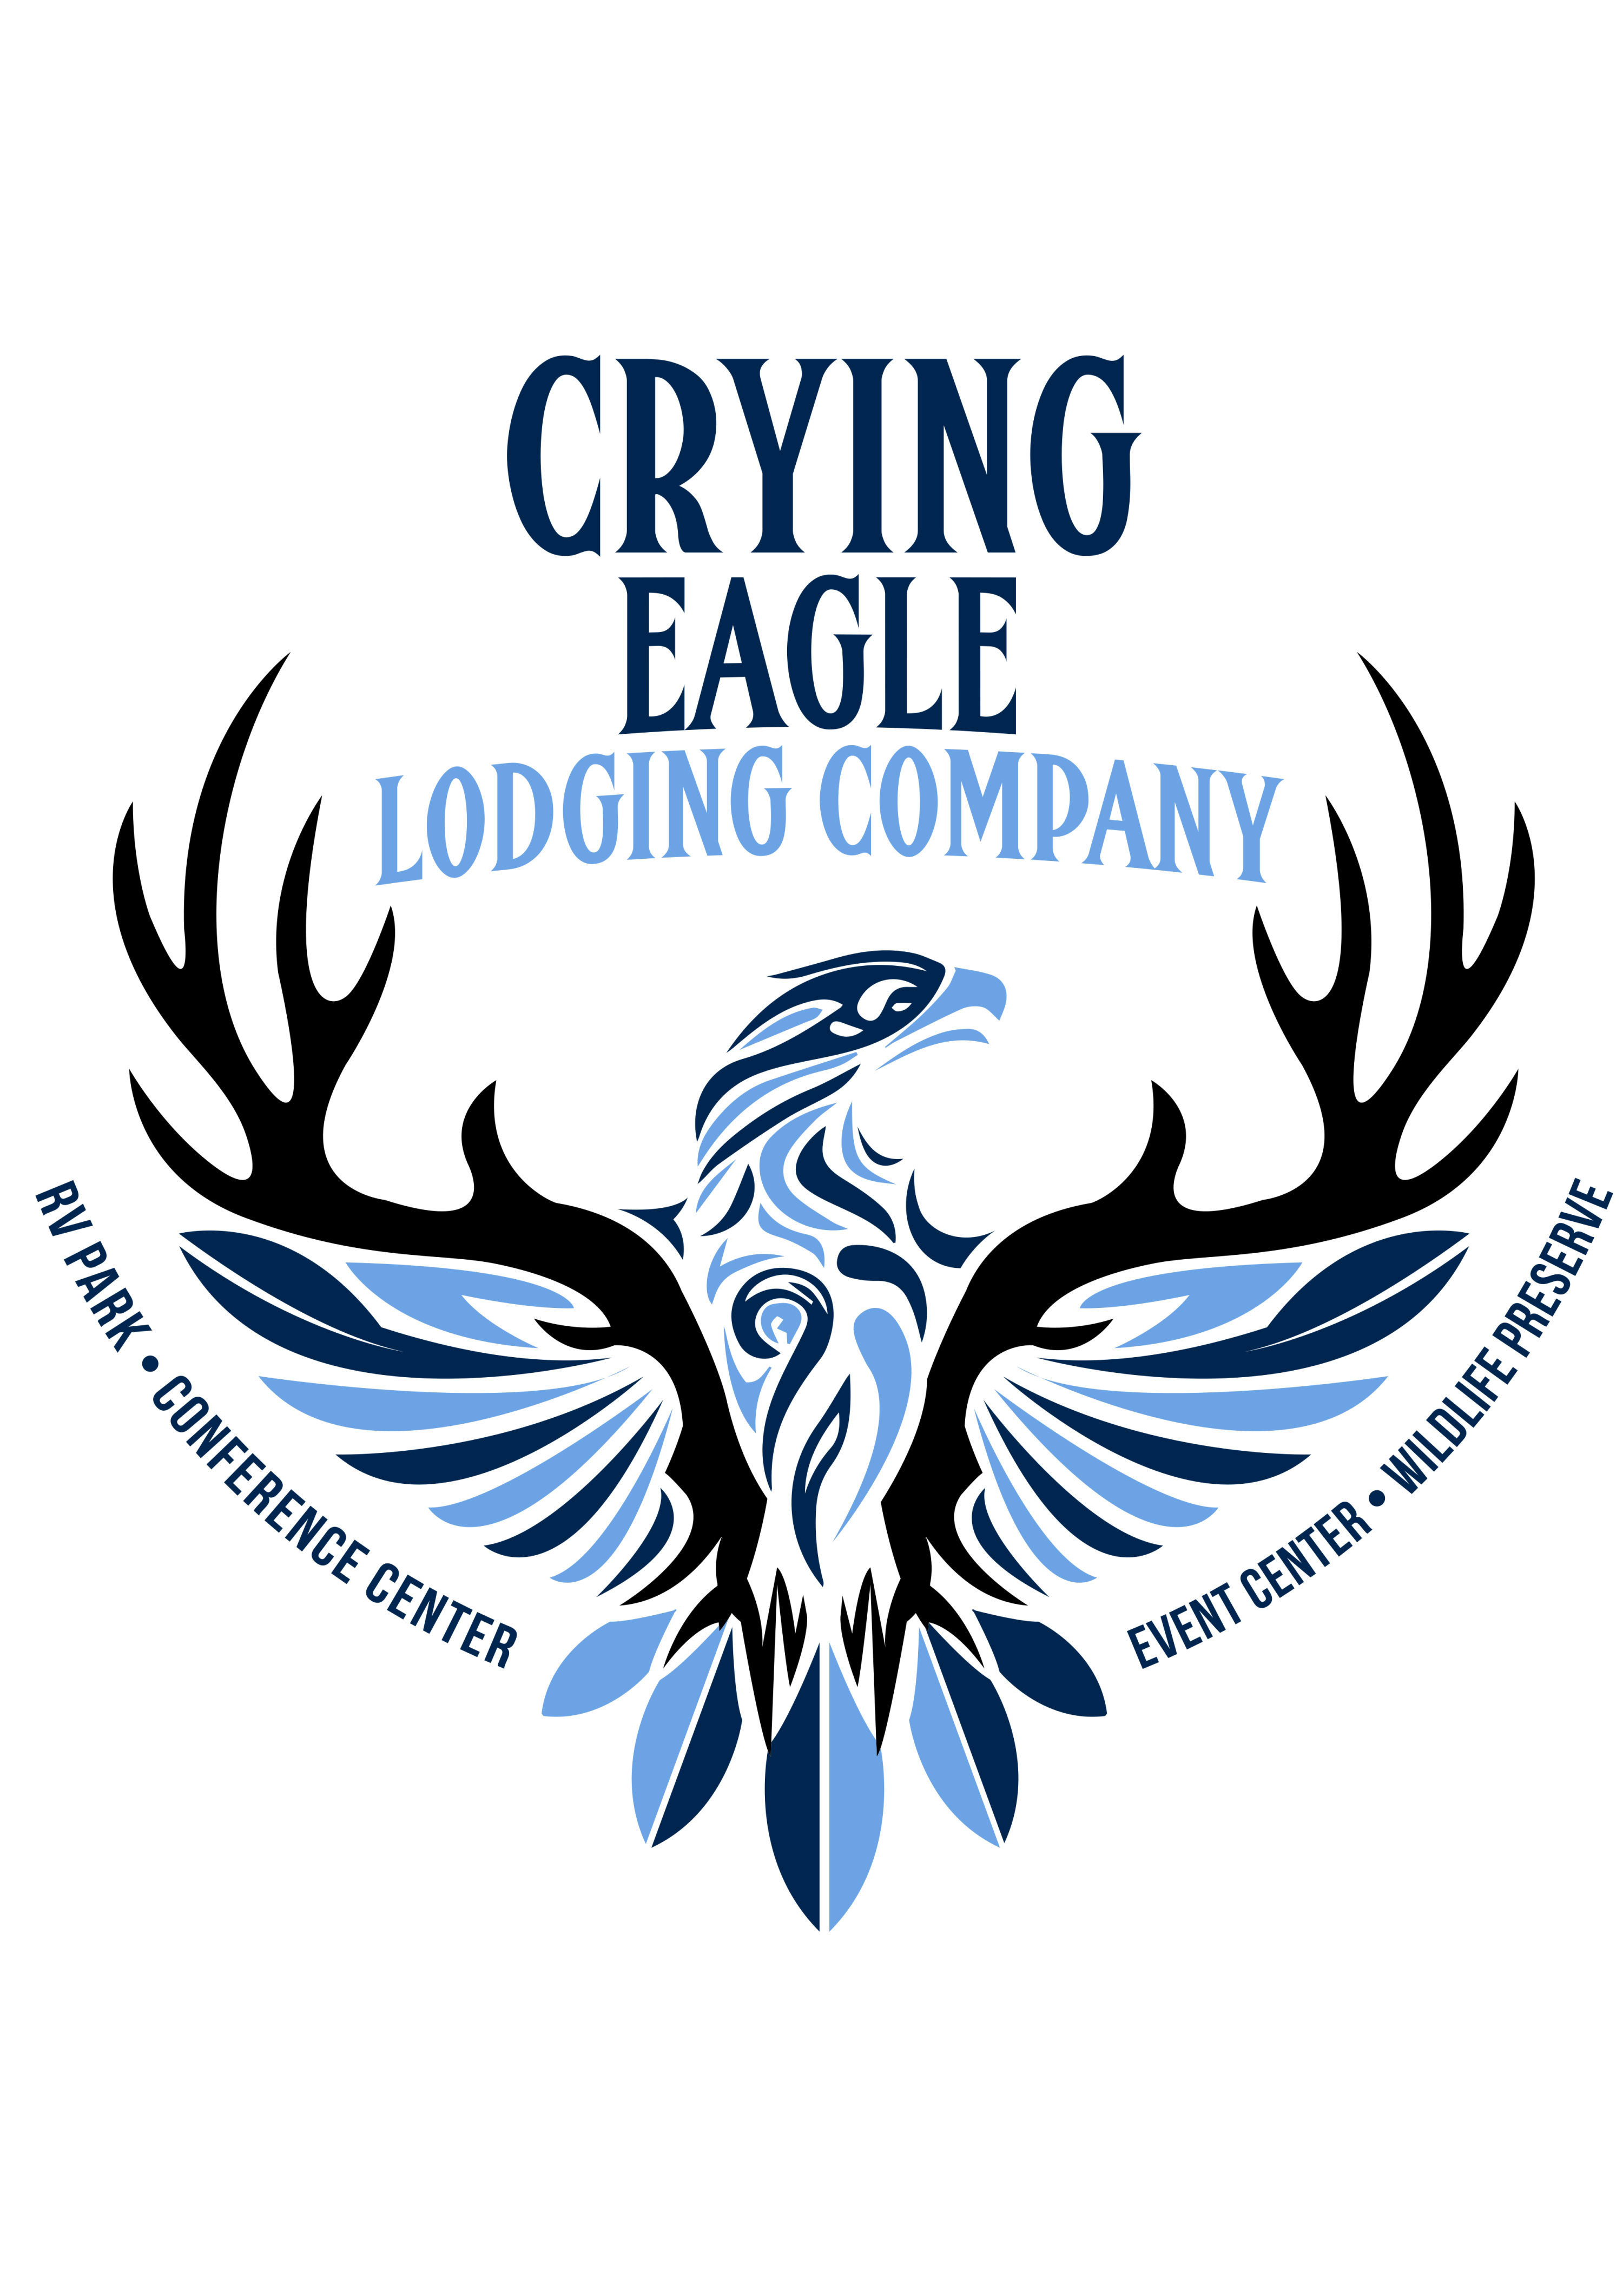 Crying Eagle Lodging Company